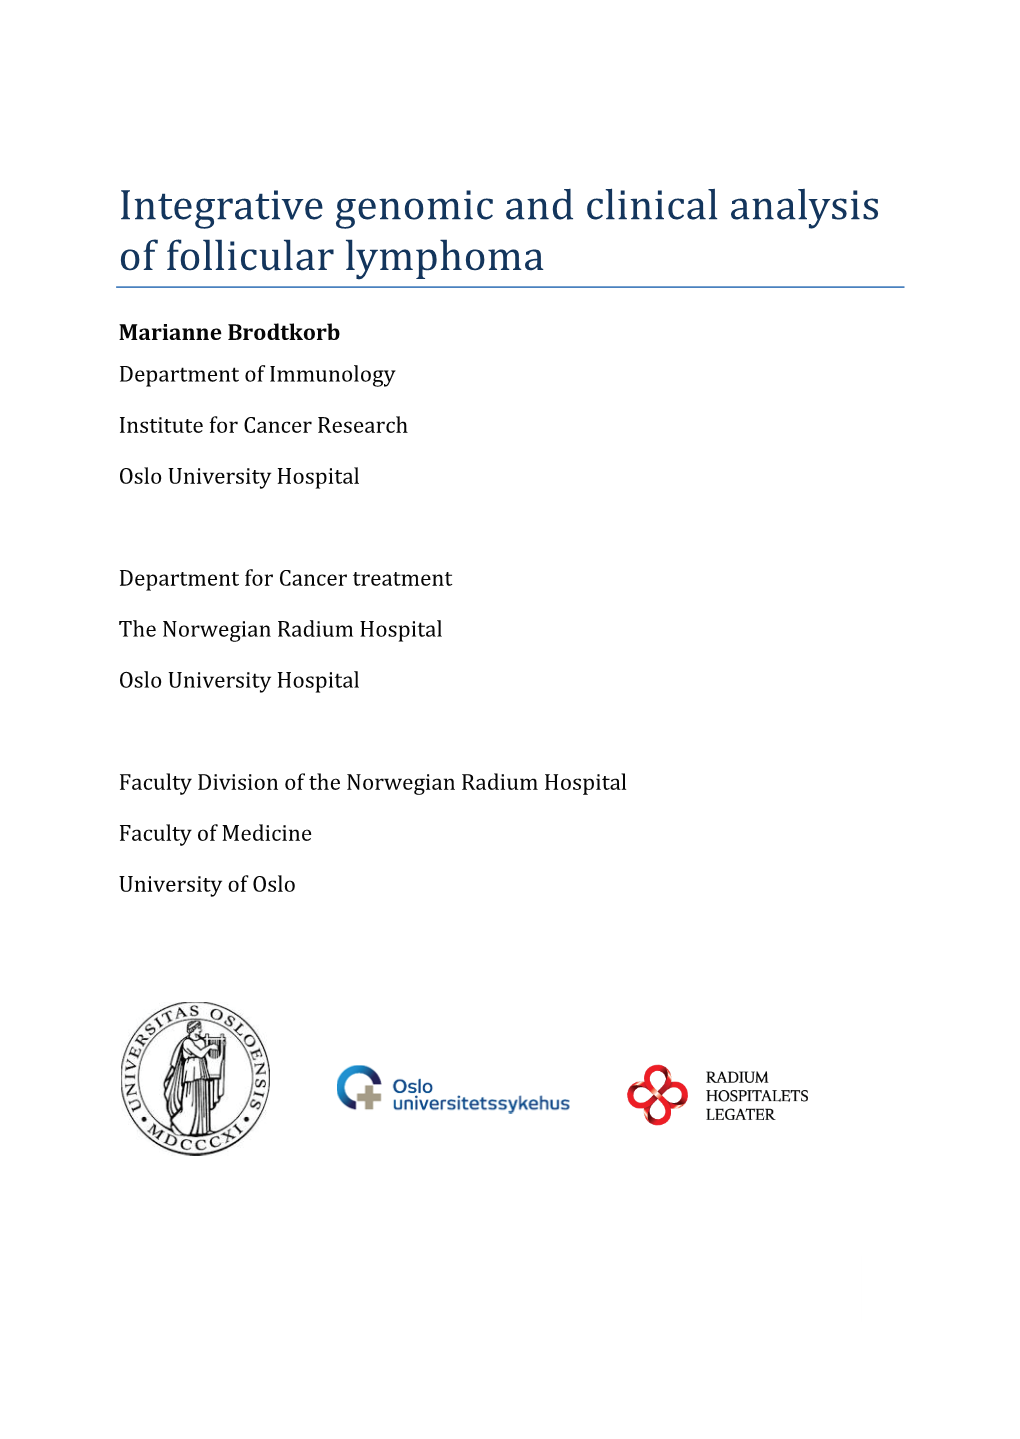 Integrative Genomic and Clinical Analysis of Follicular Lymphoma